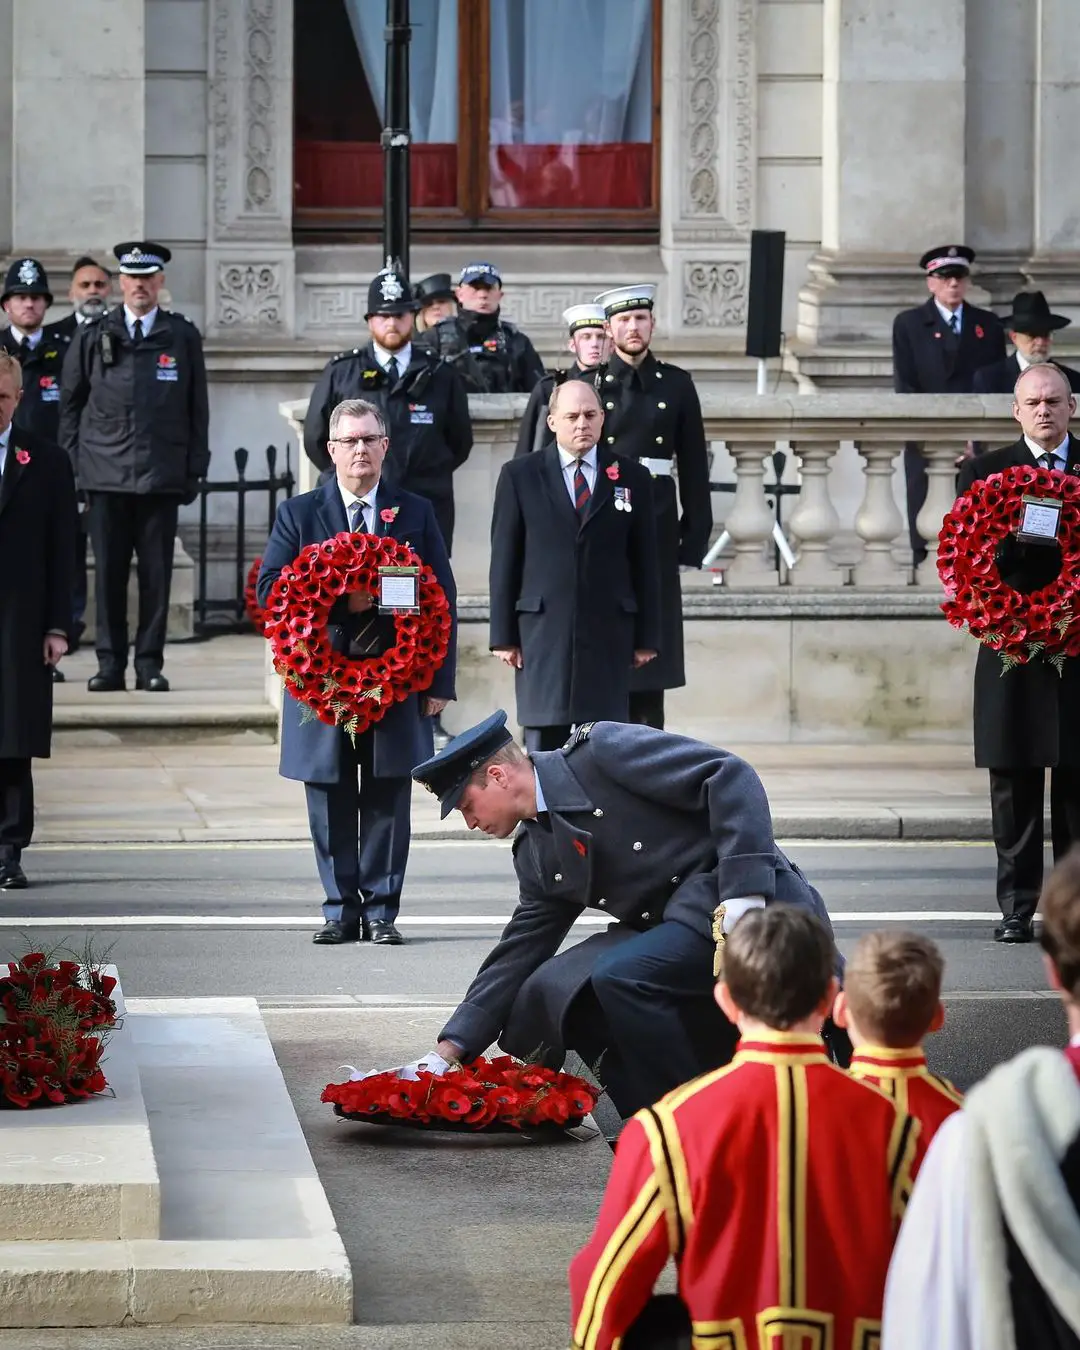 The Duke Cambridge laid wreath at Cenotaph on 2020 Remembrance Sunday Service